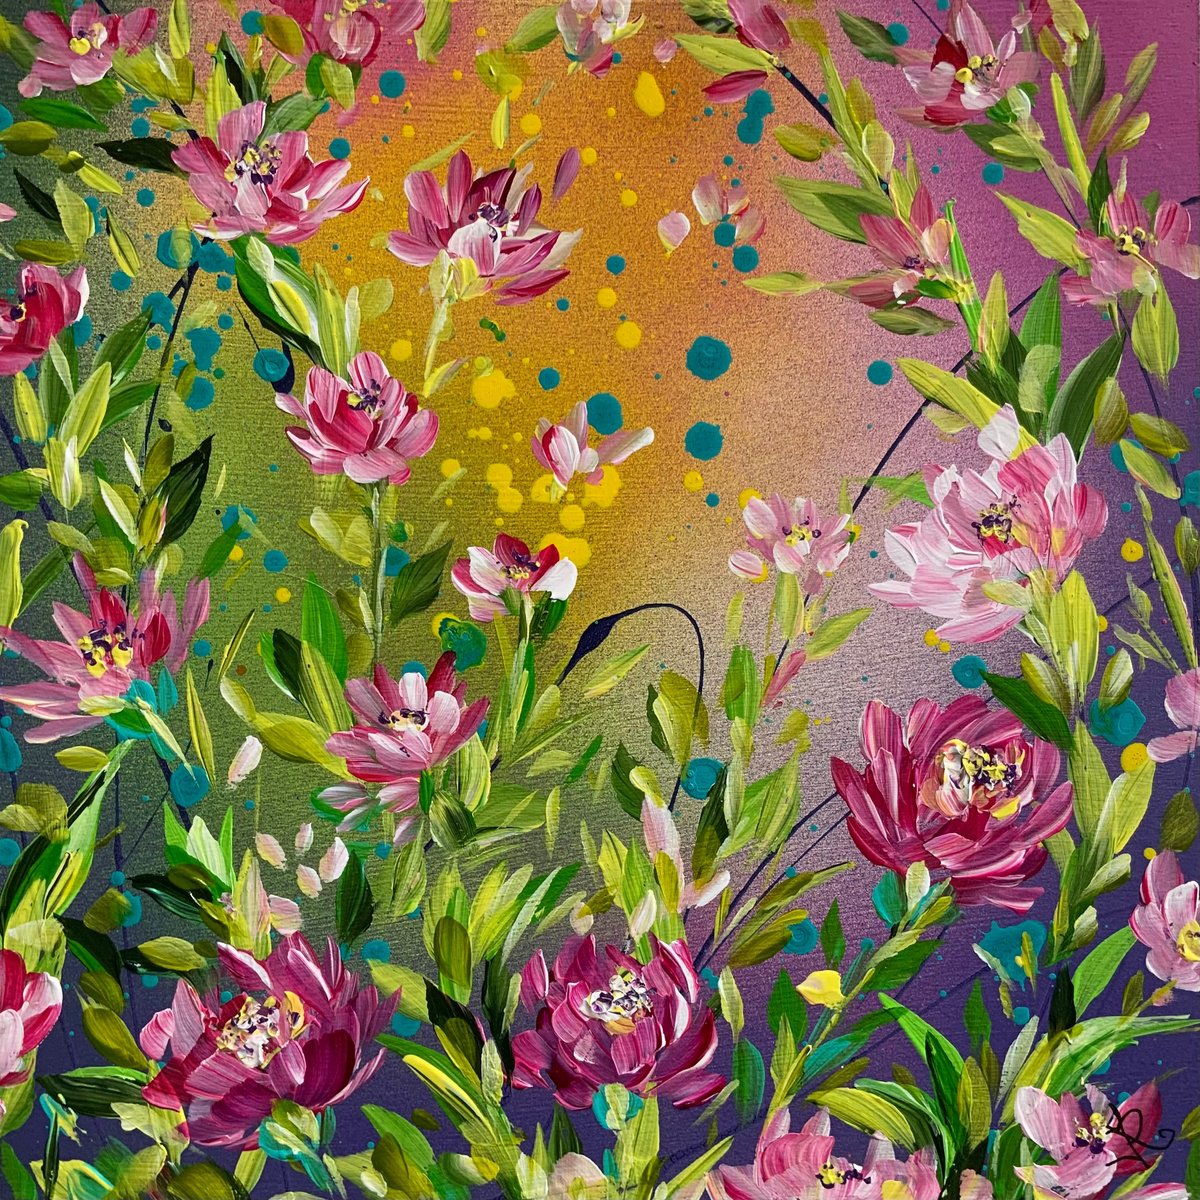 Summer Roses II by Jan Rogers